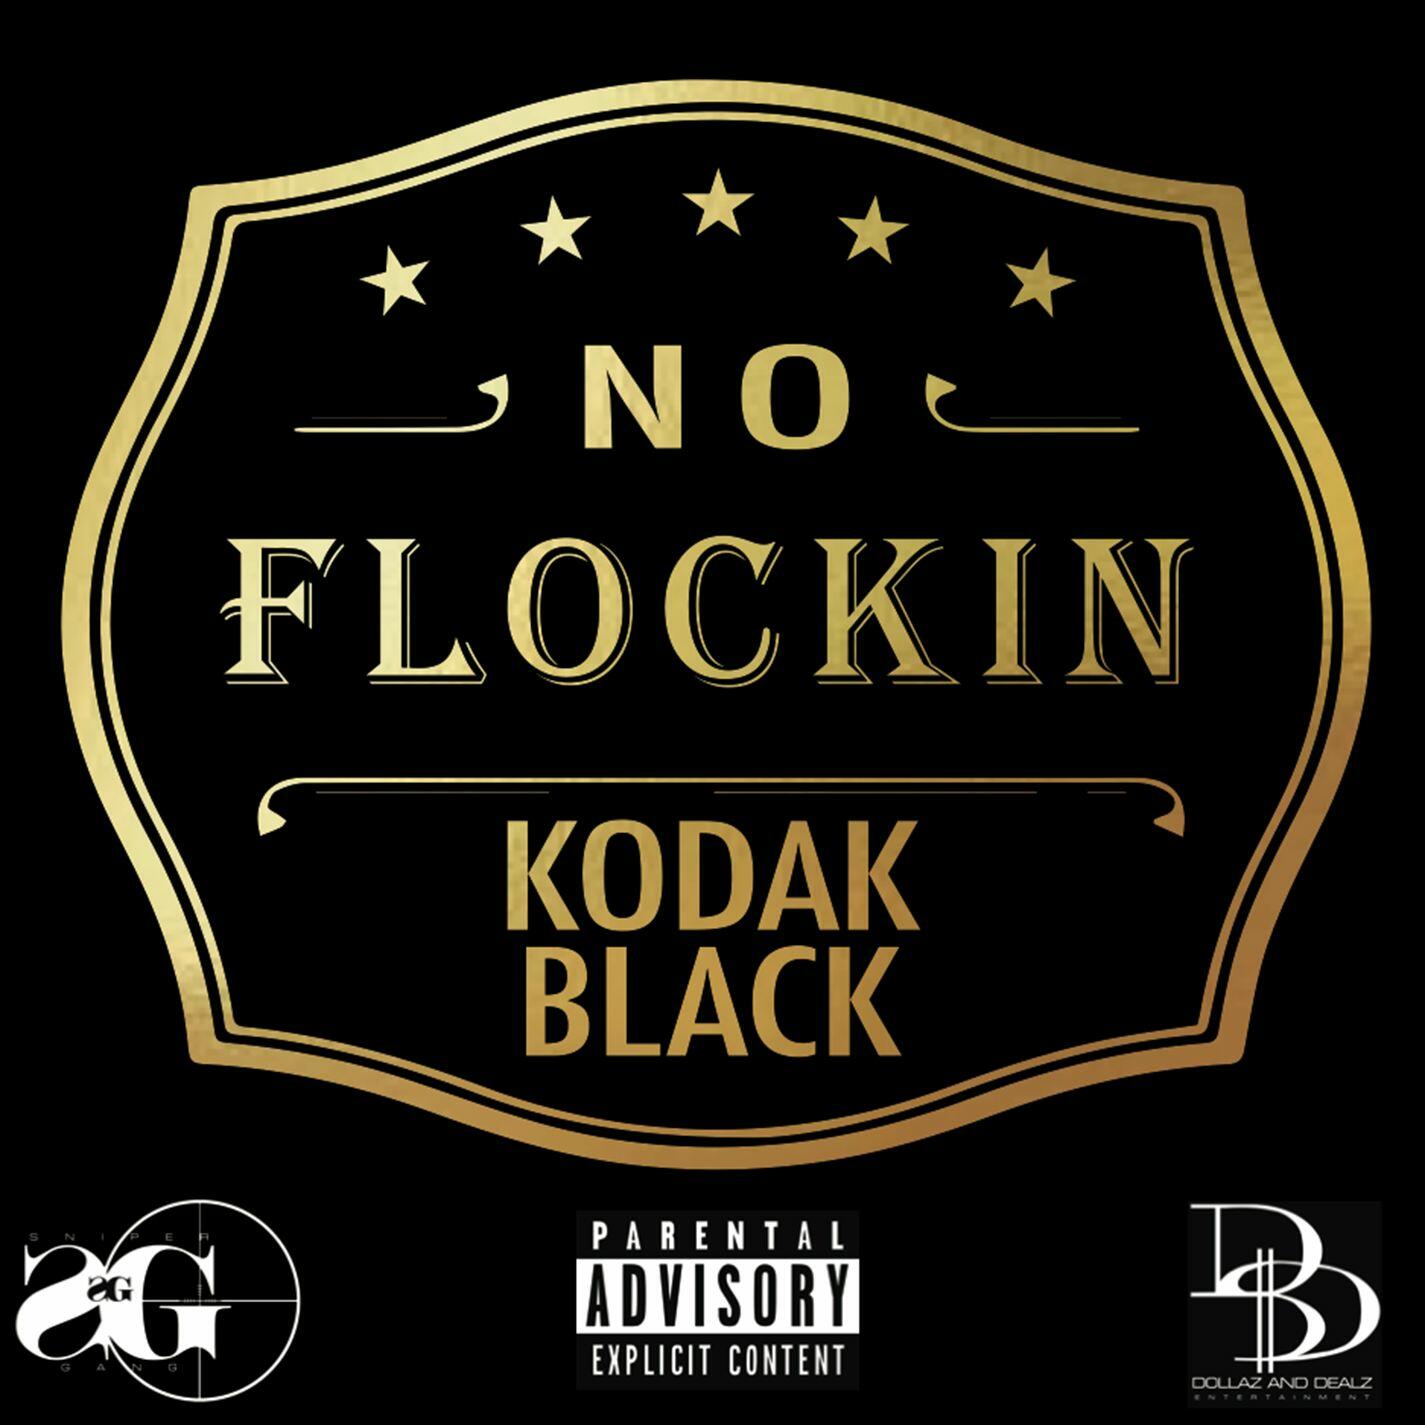 Listen Free to Kodak Black - No Flockin Radio on iHeartRadio | iHeartRadio1425 x 1425